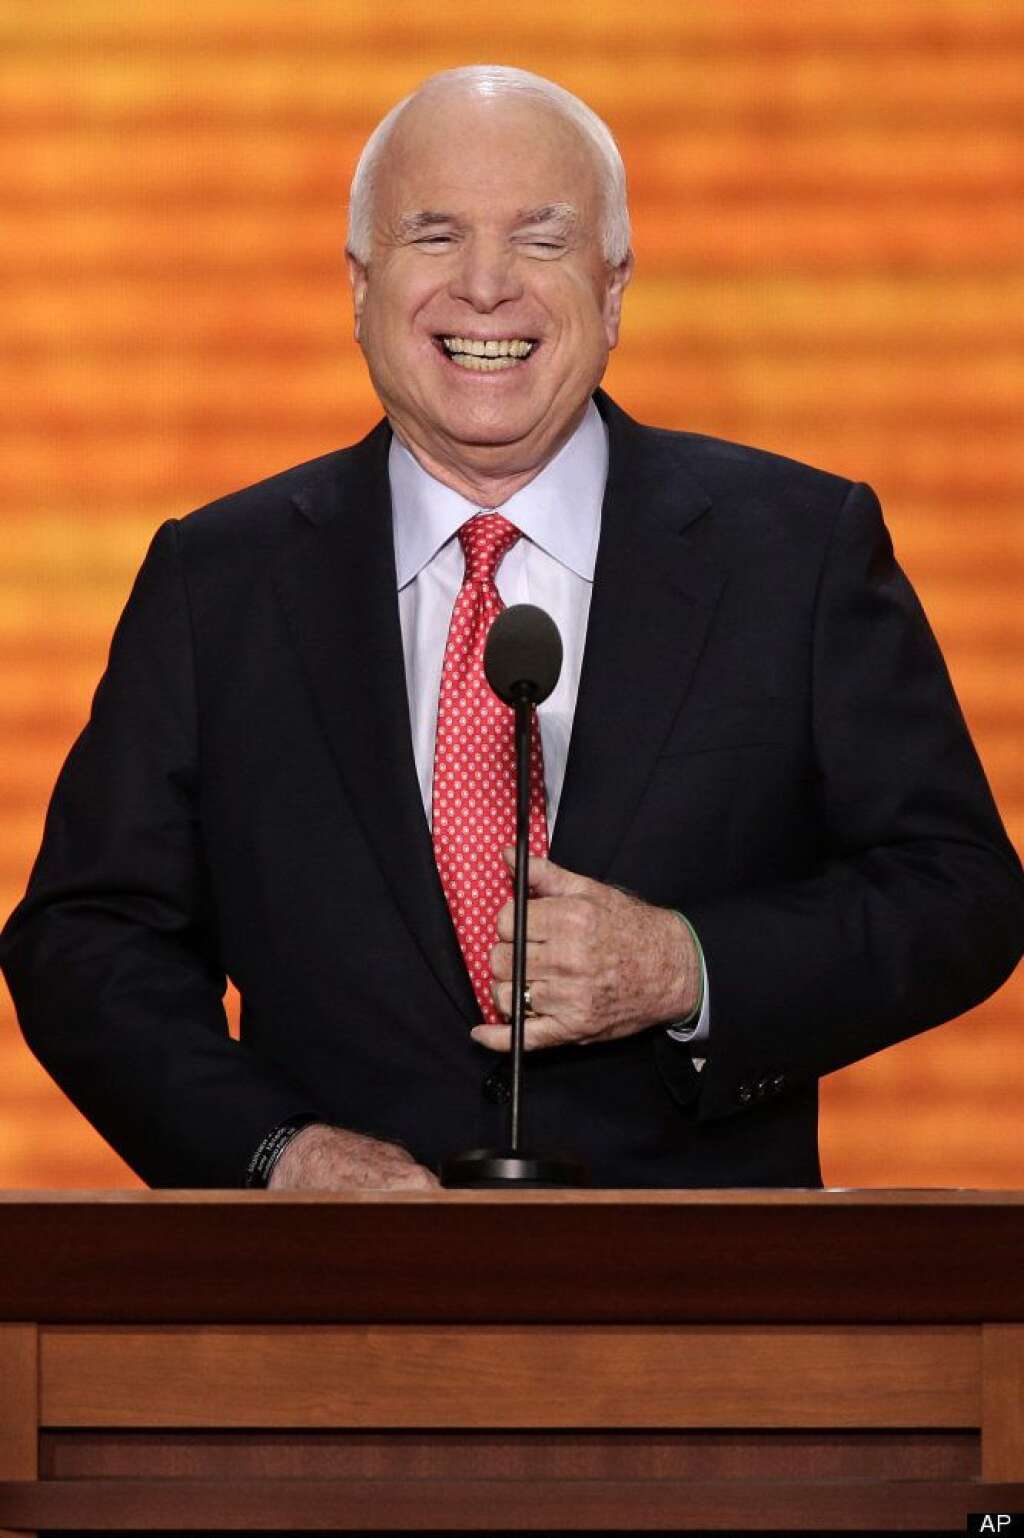 John McCain - Sen. John McCain, R-Ariz., smiles before addressing the during the Republican National Convention in Tampa, Fla., on Wednesday, Aug. 29, 2012. (AP Photo/J. Scott Applewhite)